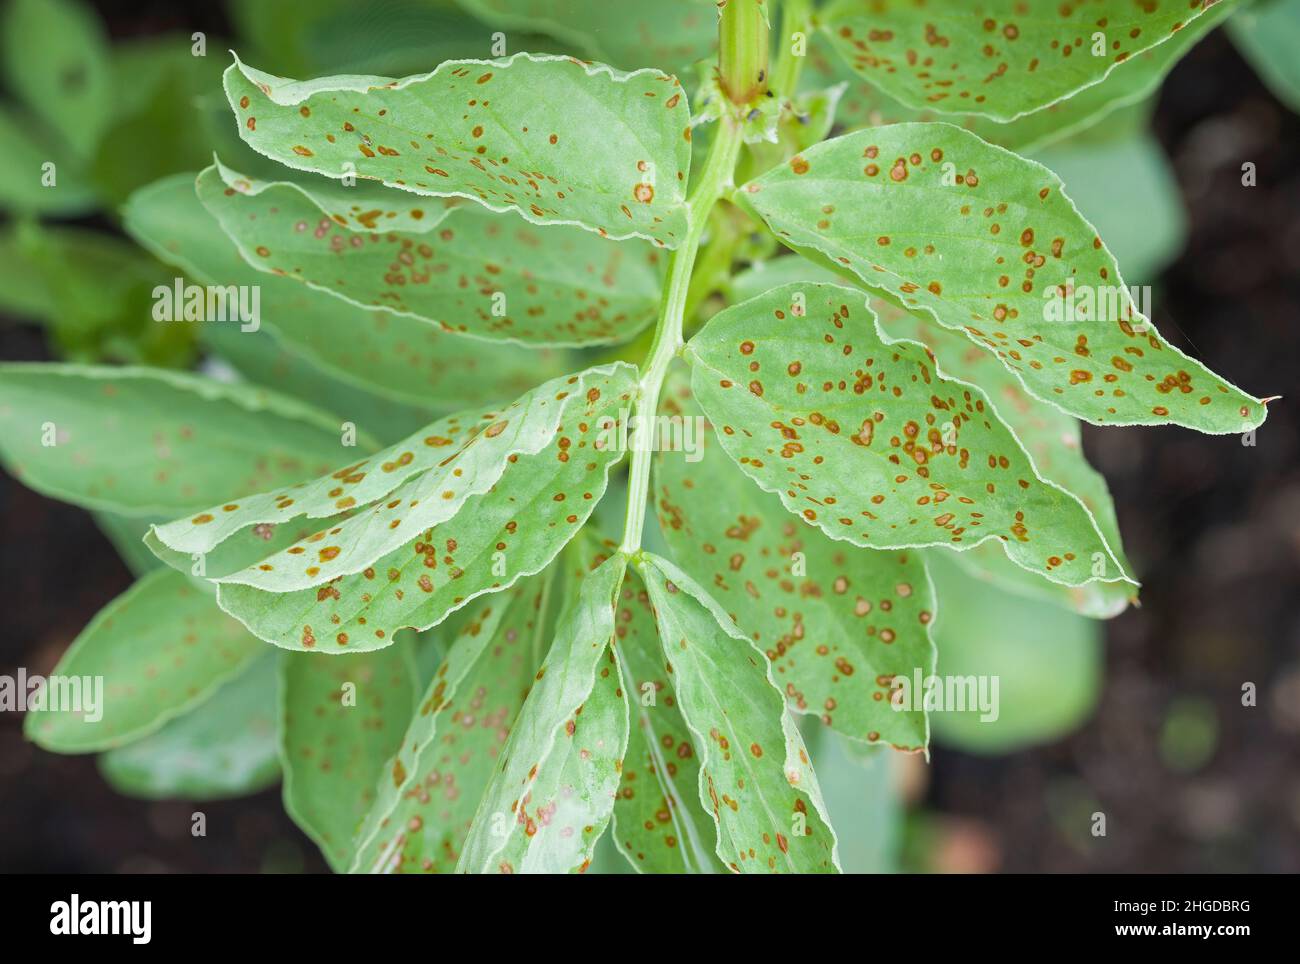 Rust plant disease, rust spots on leaves of broad bean plant in UK vegetable garden Stock Photo